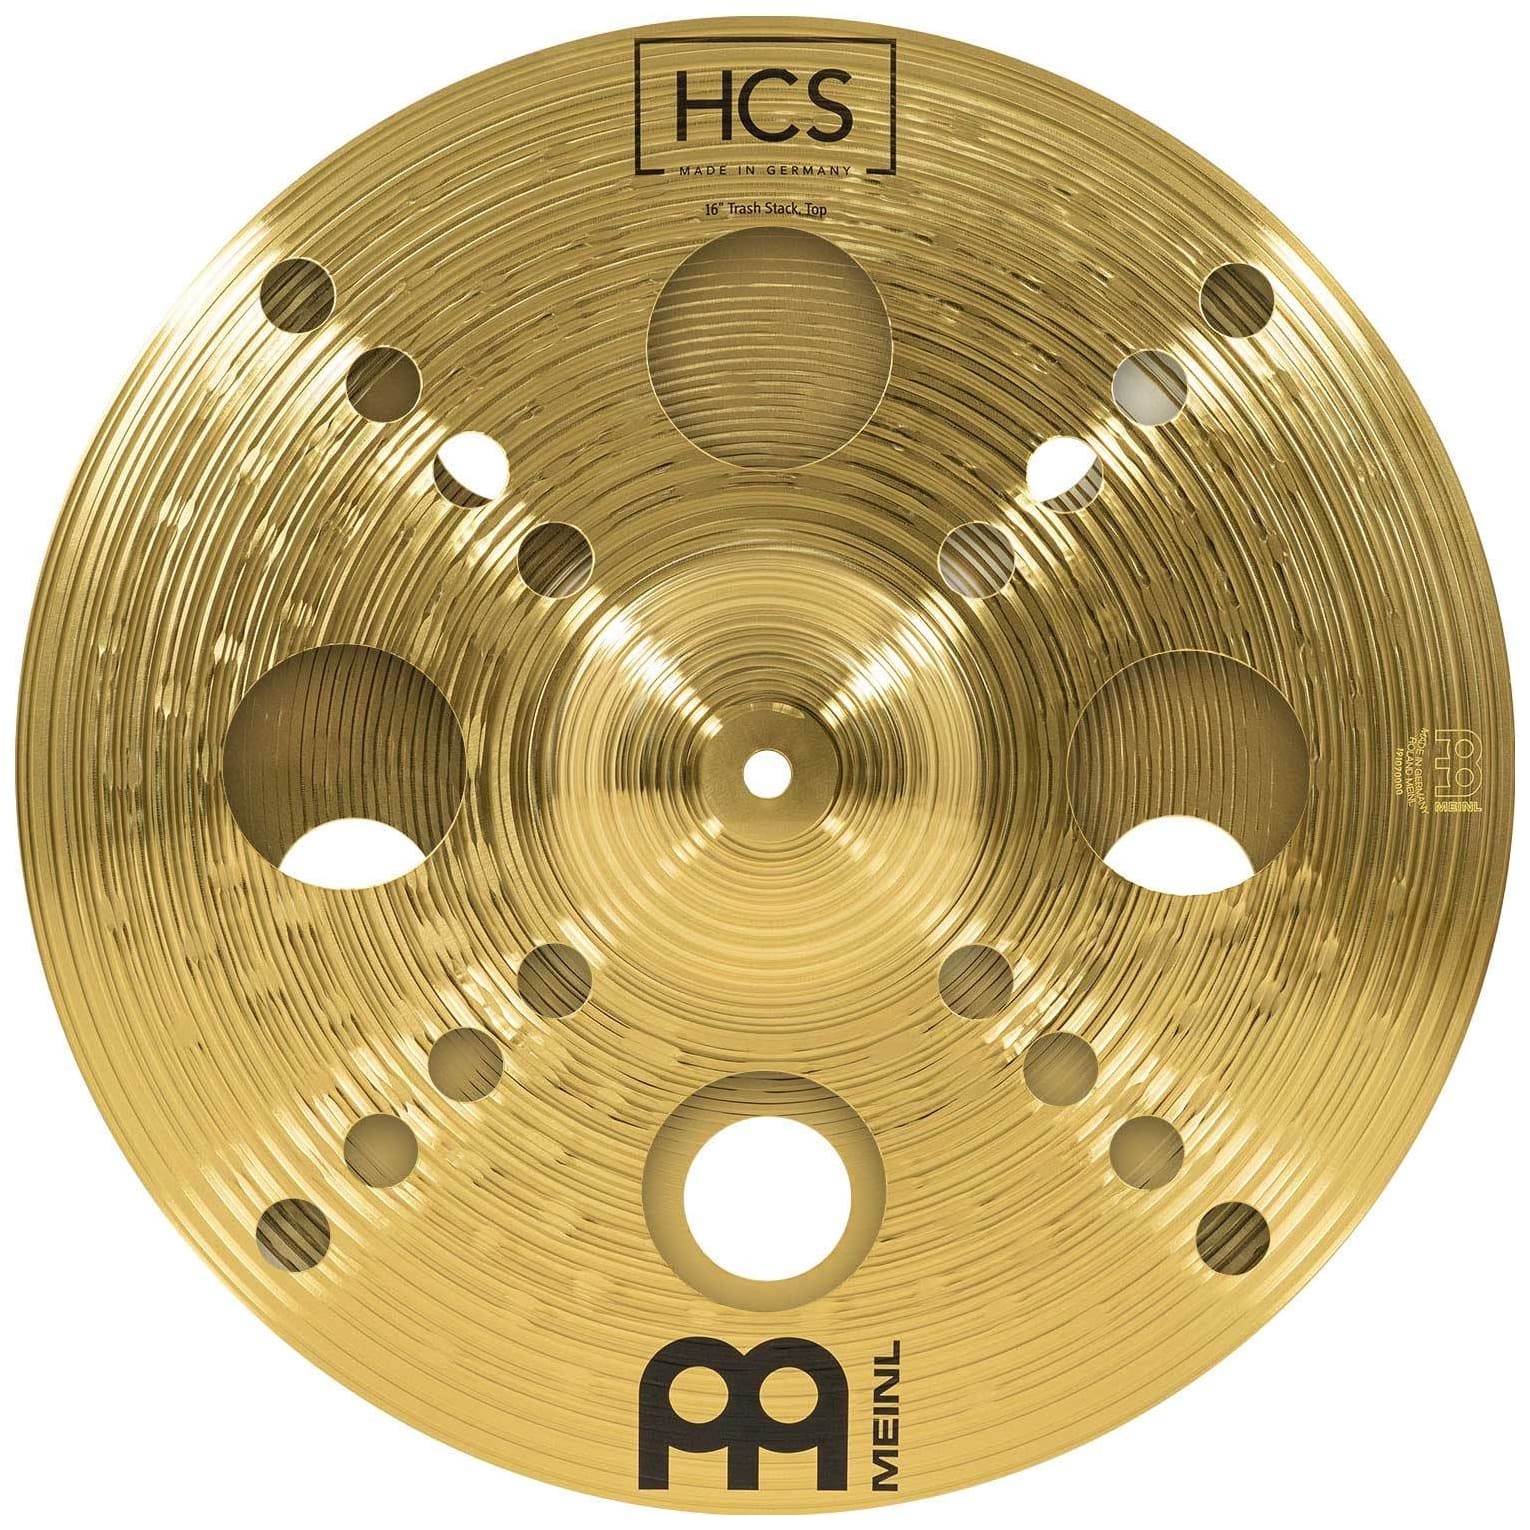 Meinl Cymbals HCS16TRS - 16" HCS Trash Stack 